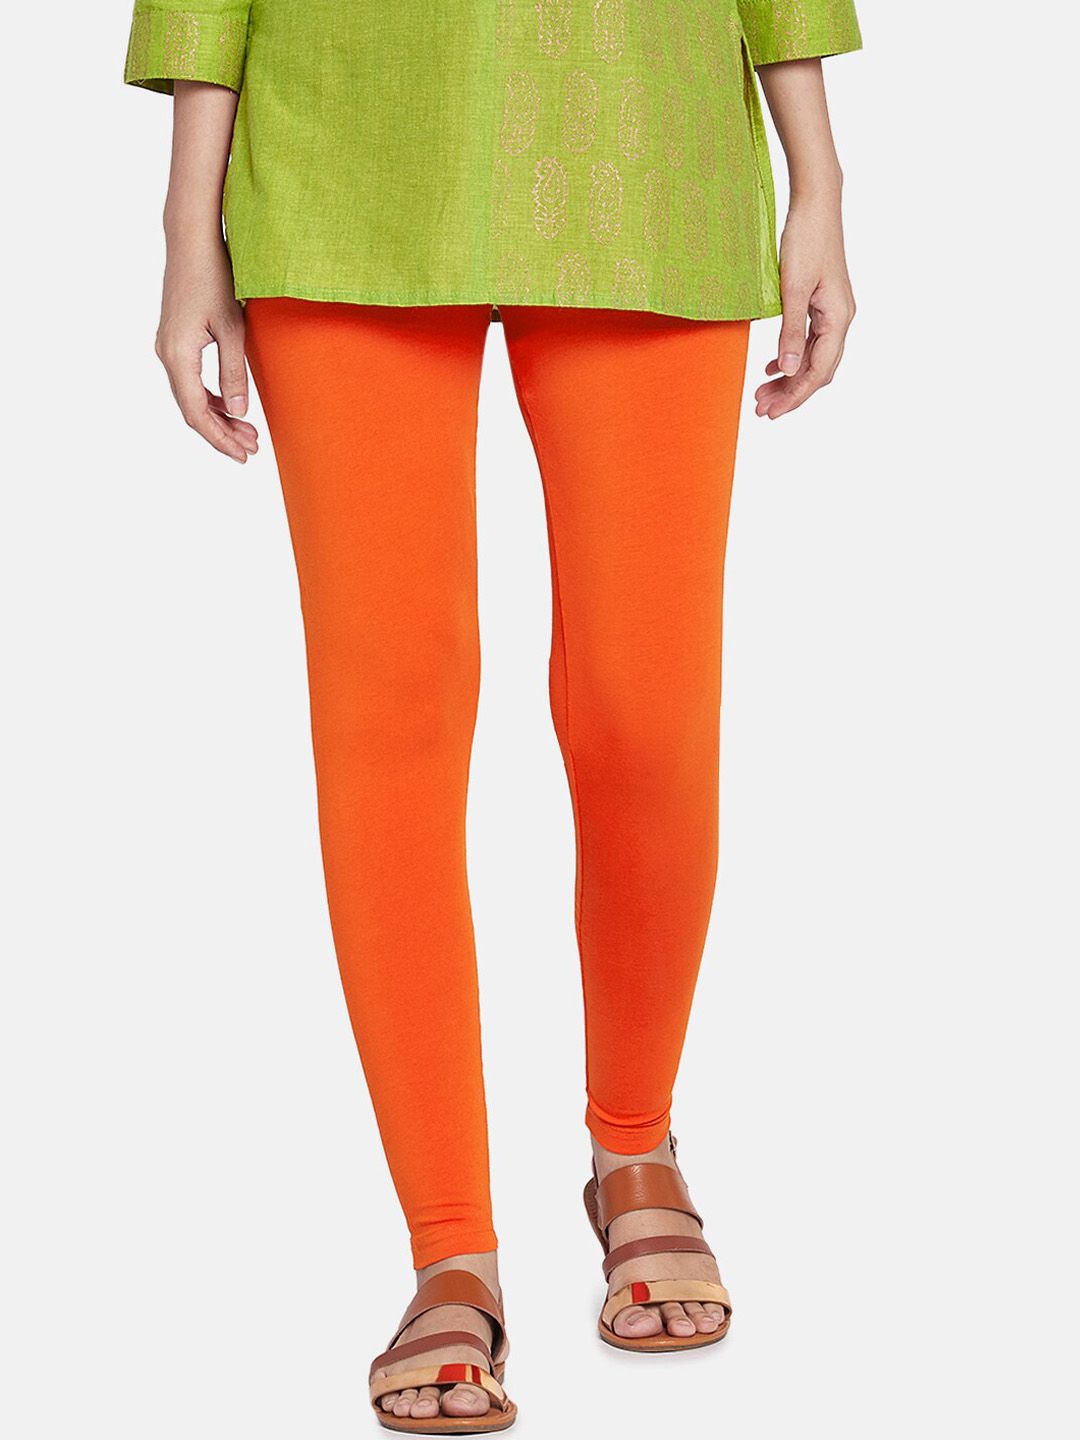 Go Colors Women Orange Solid Ankle-Length Cotton Leggings Price in India